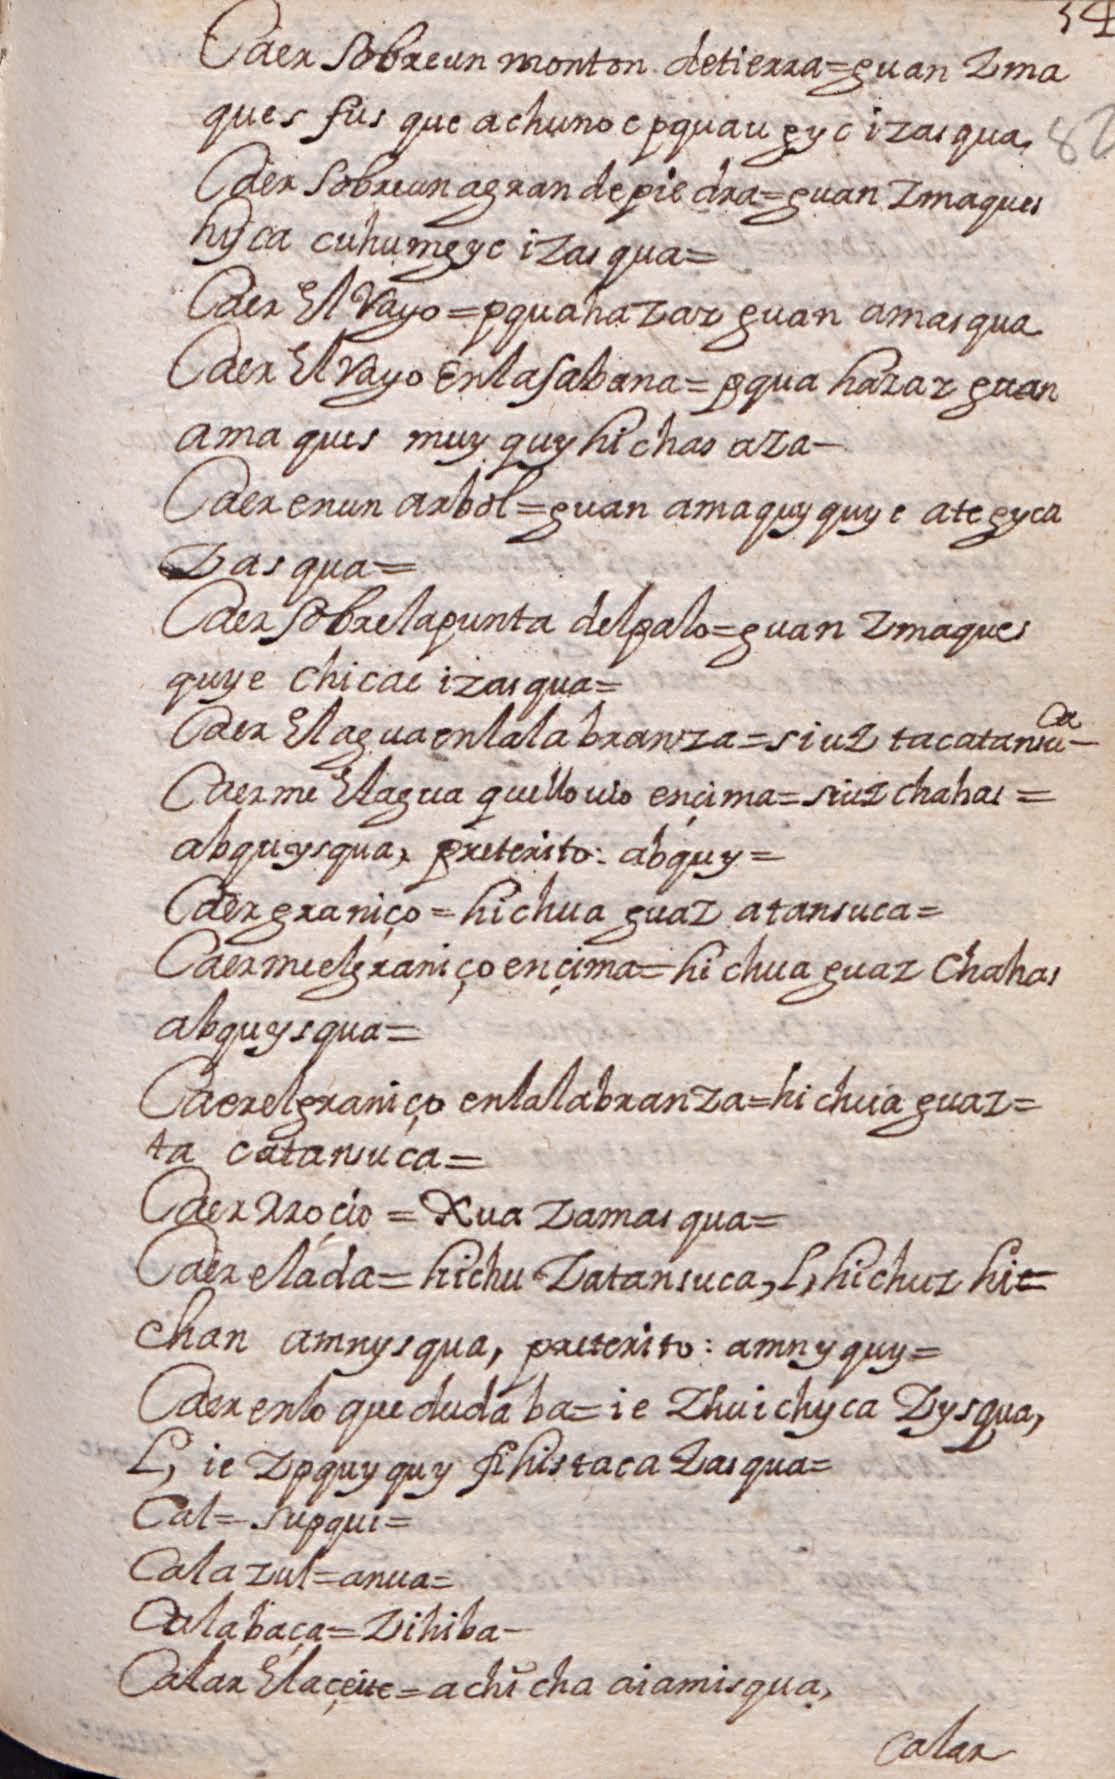 Manuscrito 158 BNC Vocabulario - fol 34r.jpg